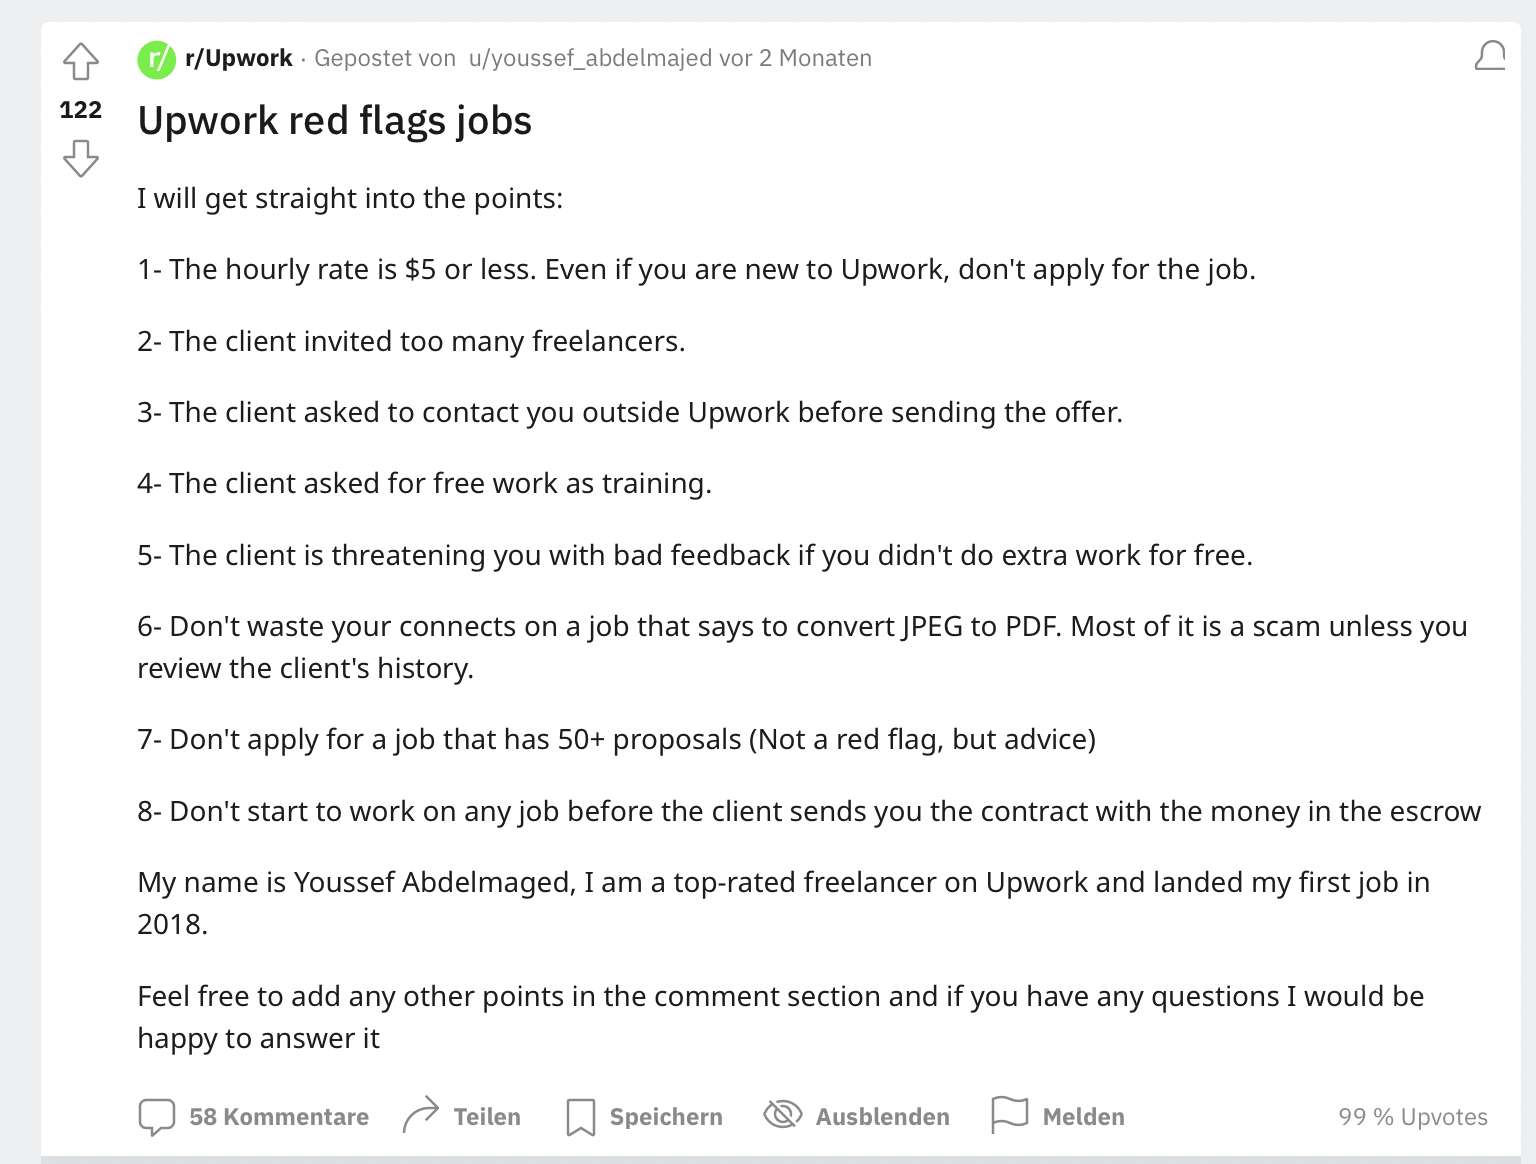 A freelancer's tips to apply for jobs on Upwork on Reddit